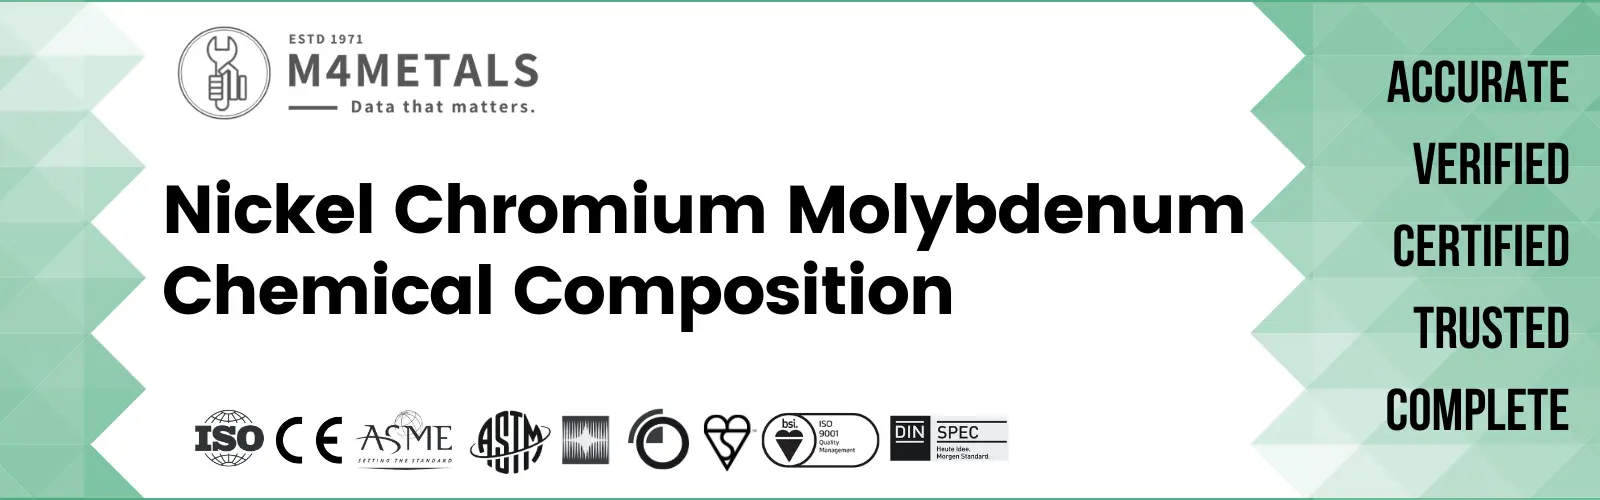 Nickel Chromium Molybdenum Chemical Composition